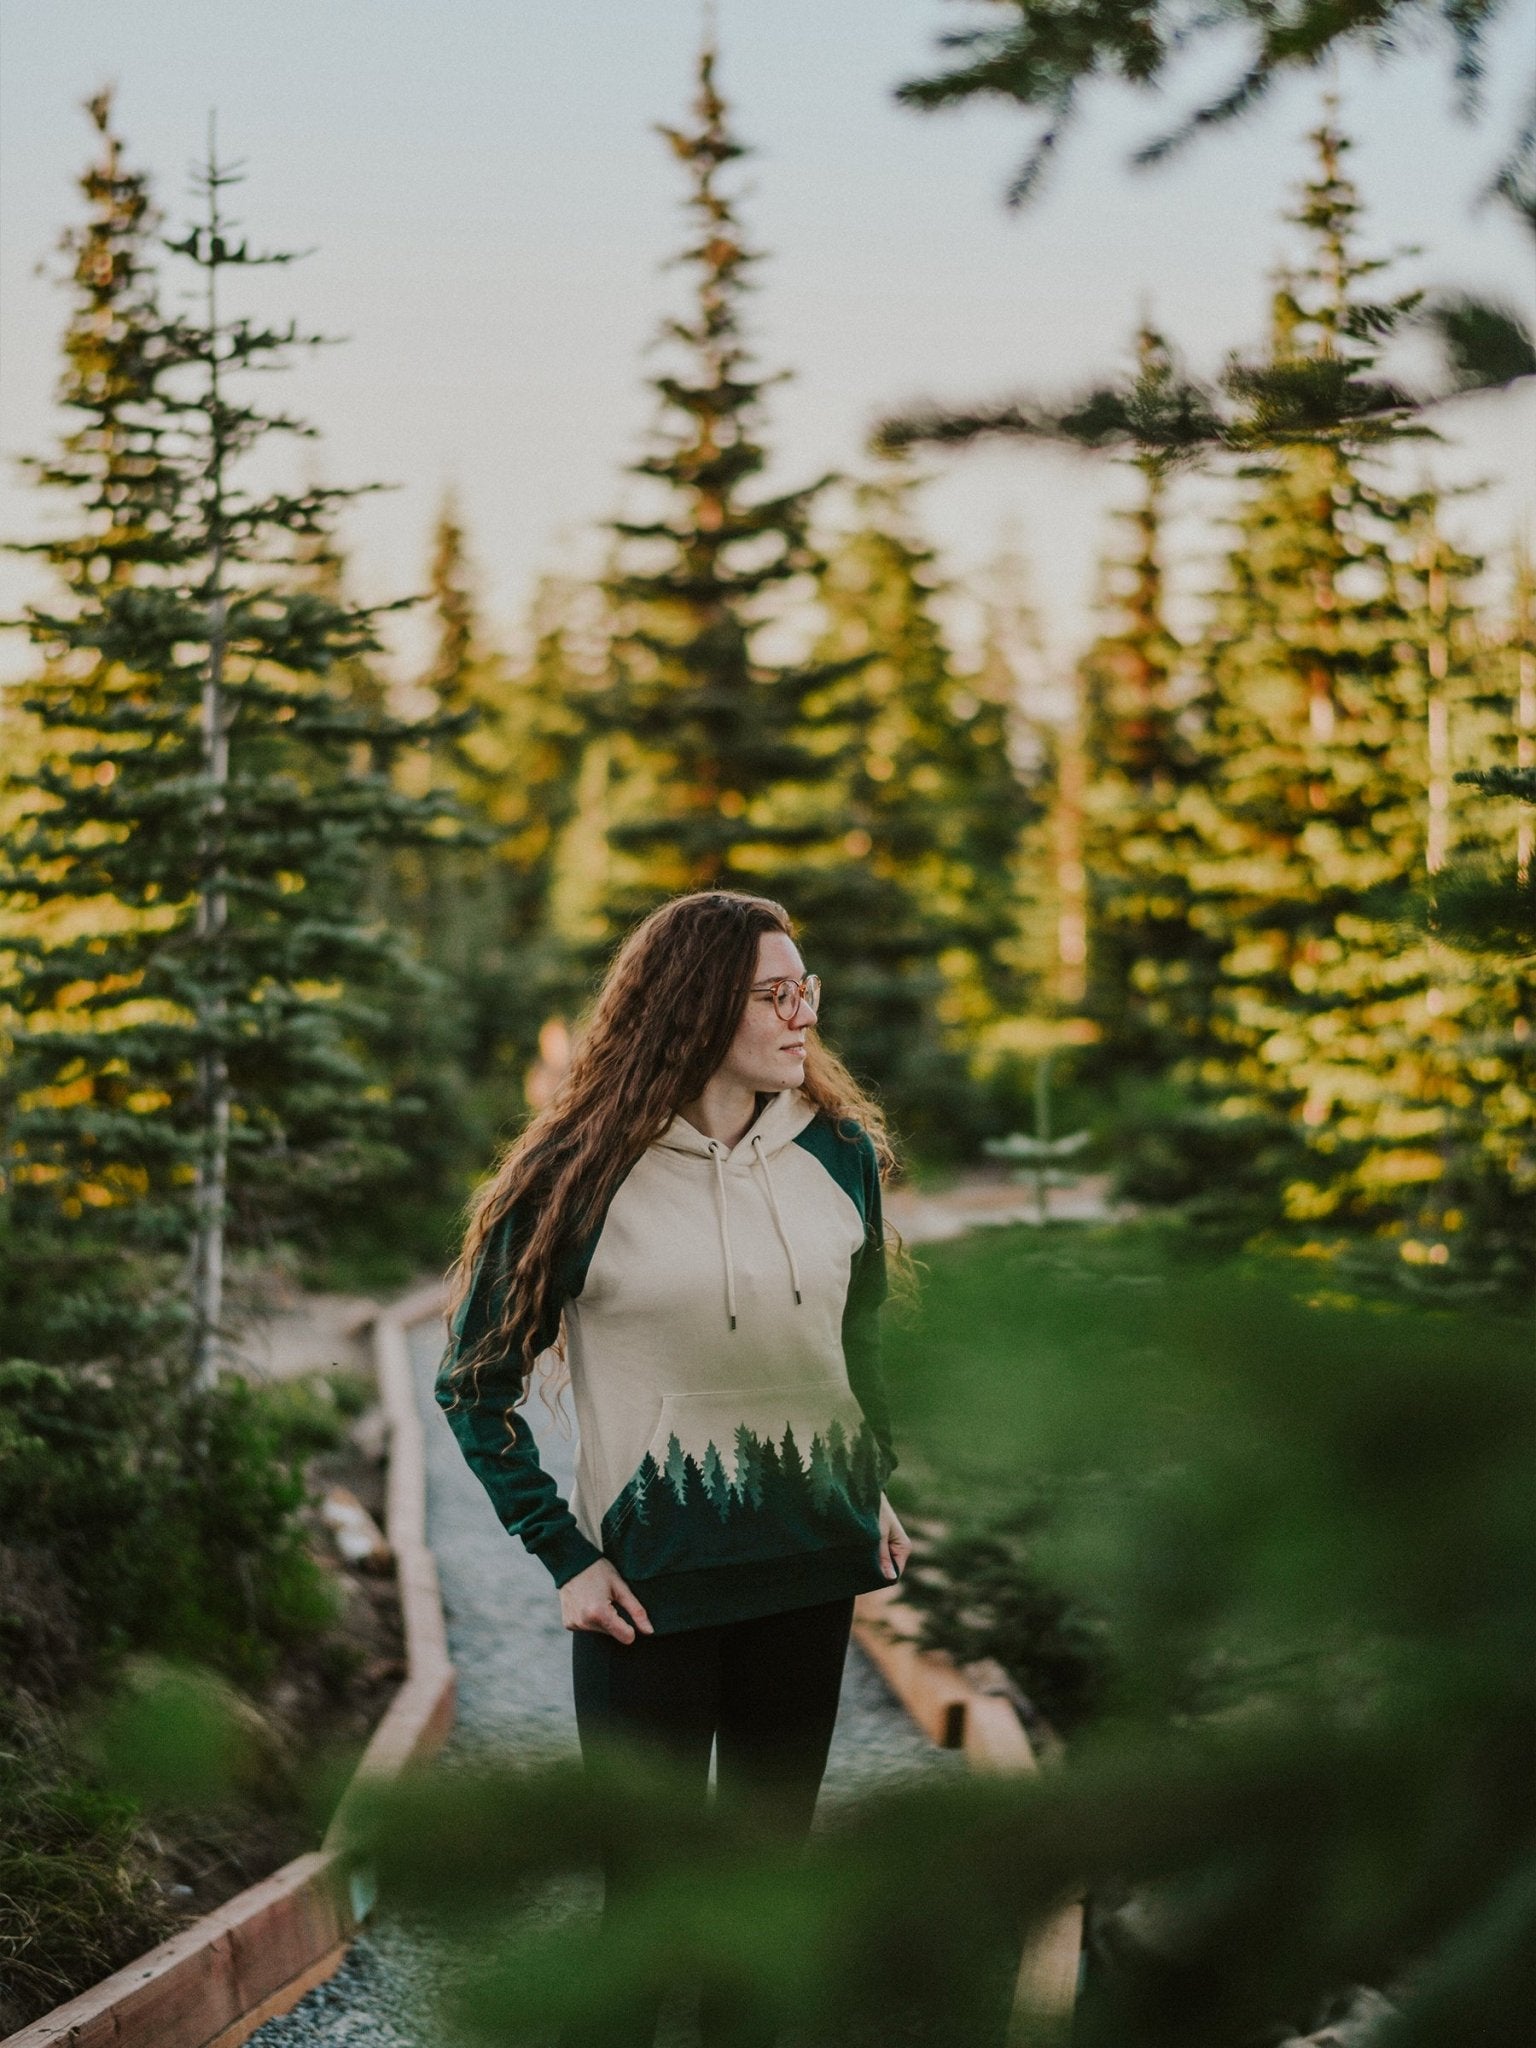 Fading Forest Hoodie Organic Sweatshirt - Happy Earth Apparel